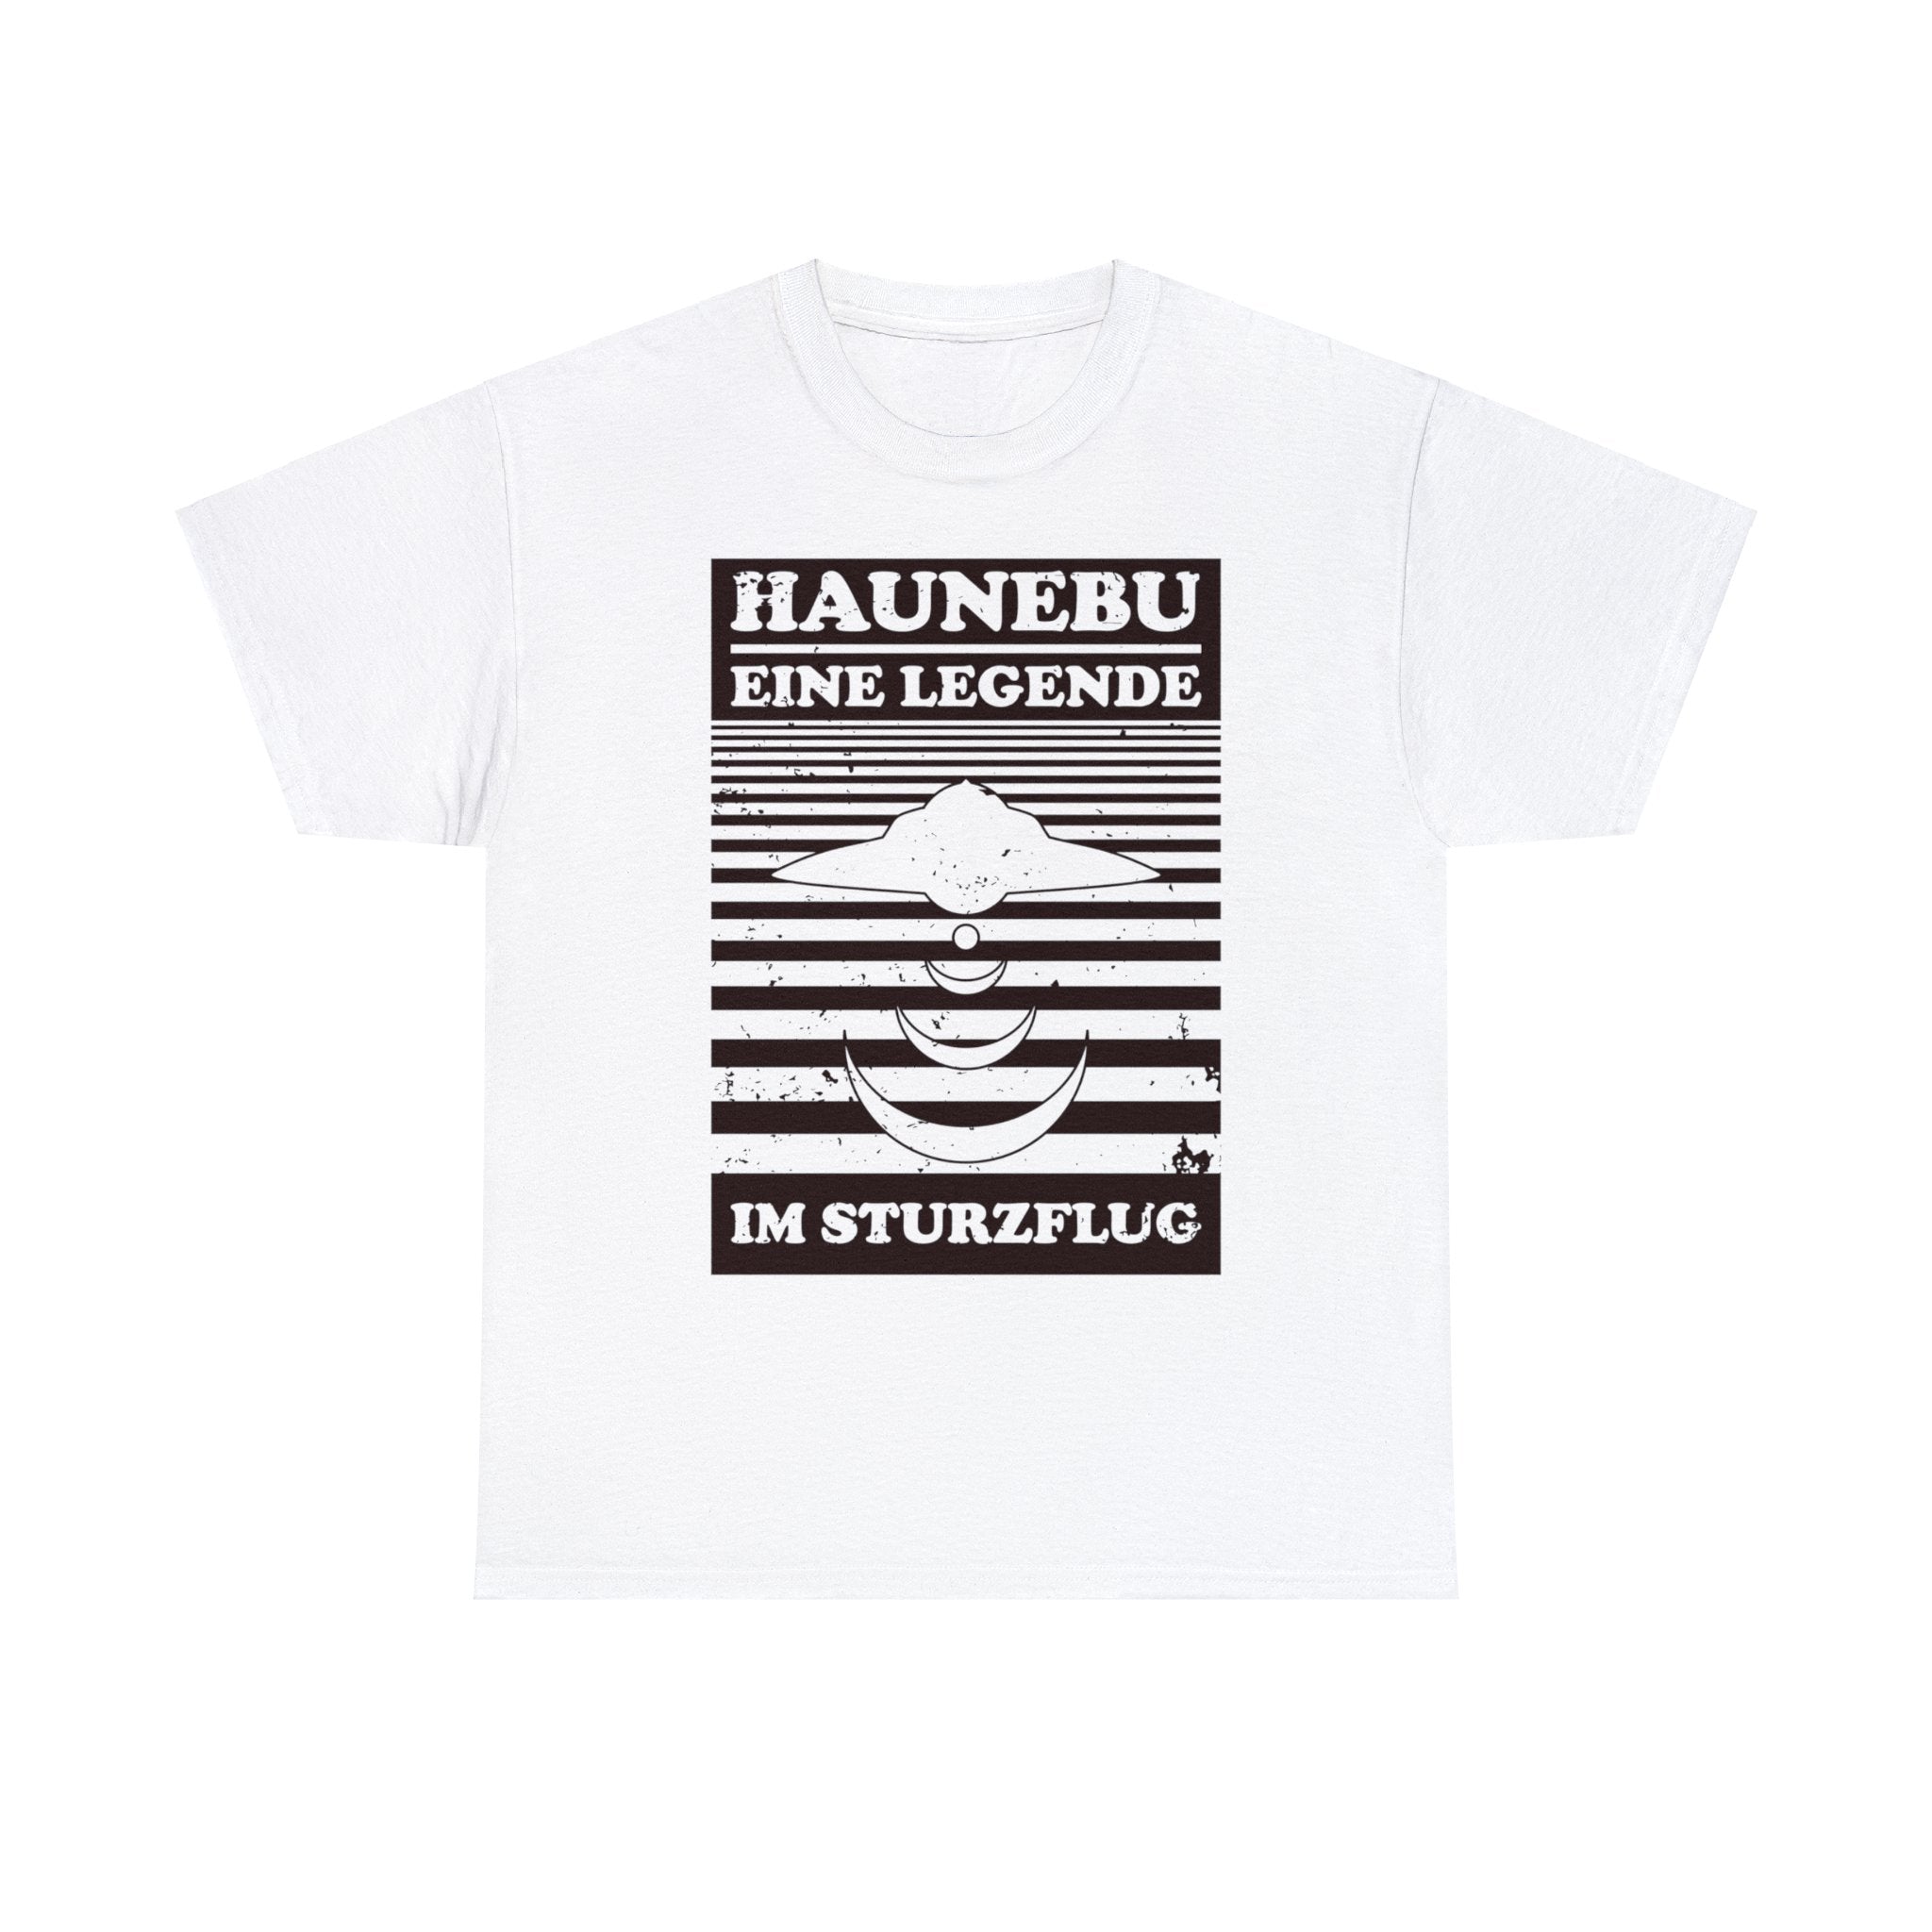 Haunebu - Legende 2 - T-Shirt